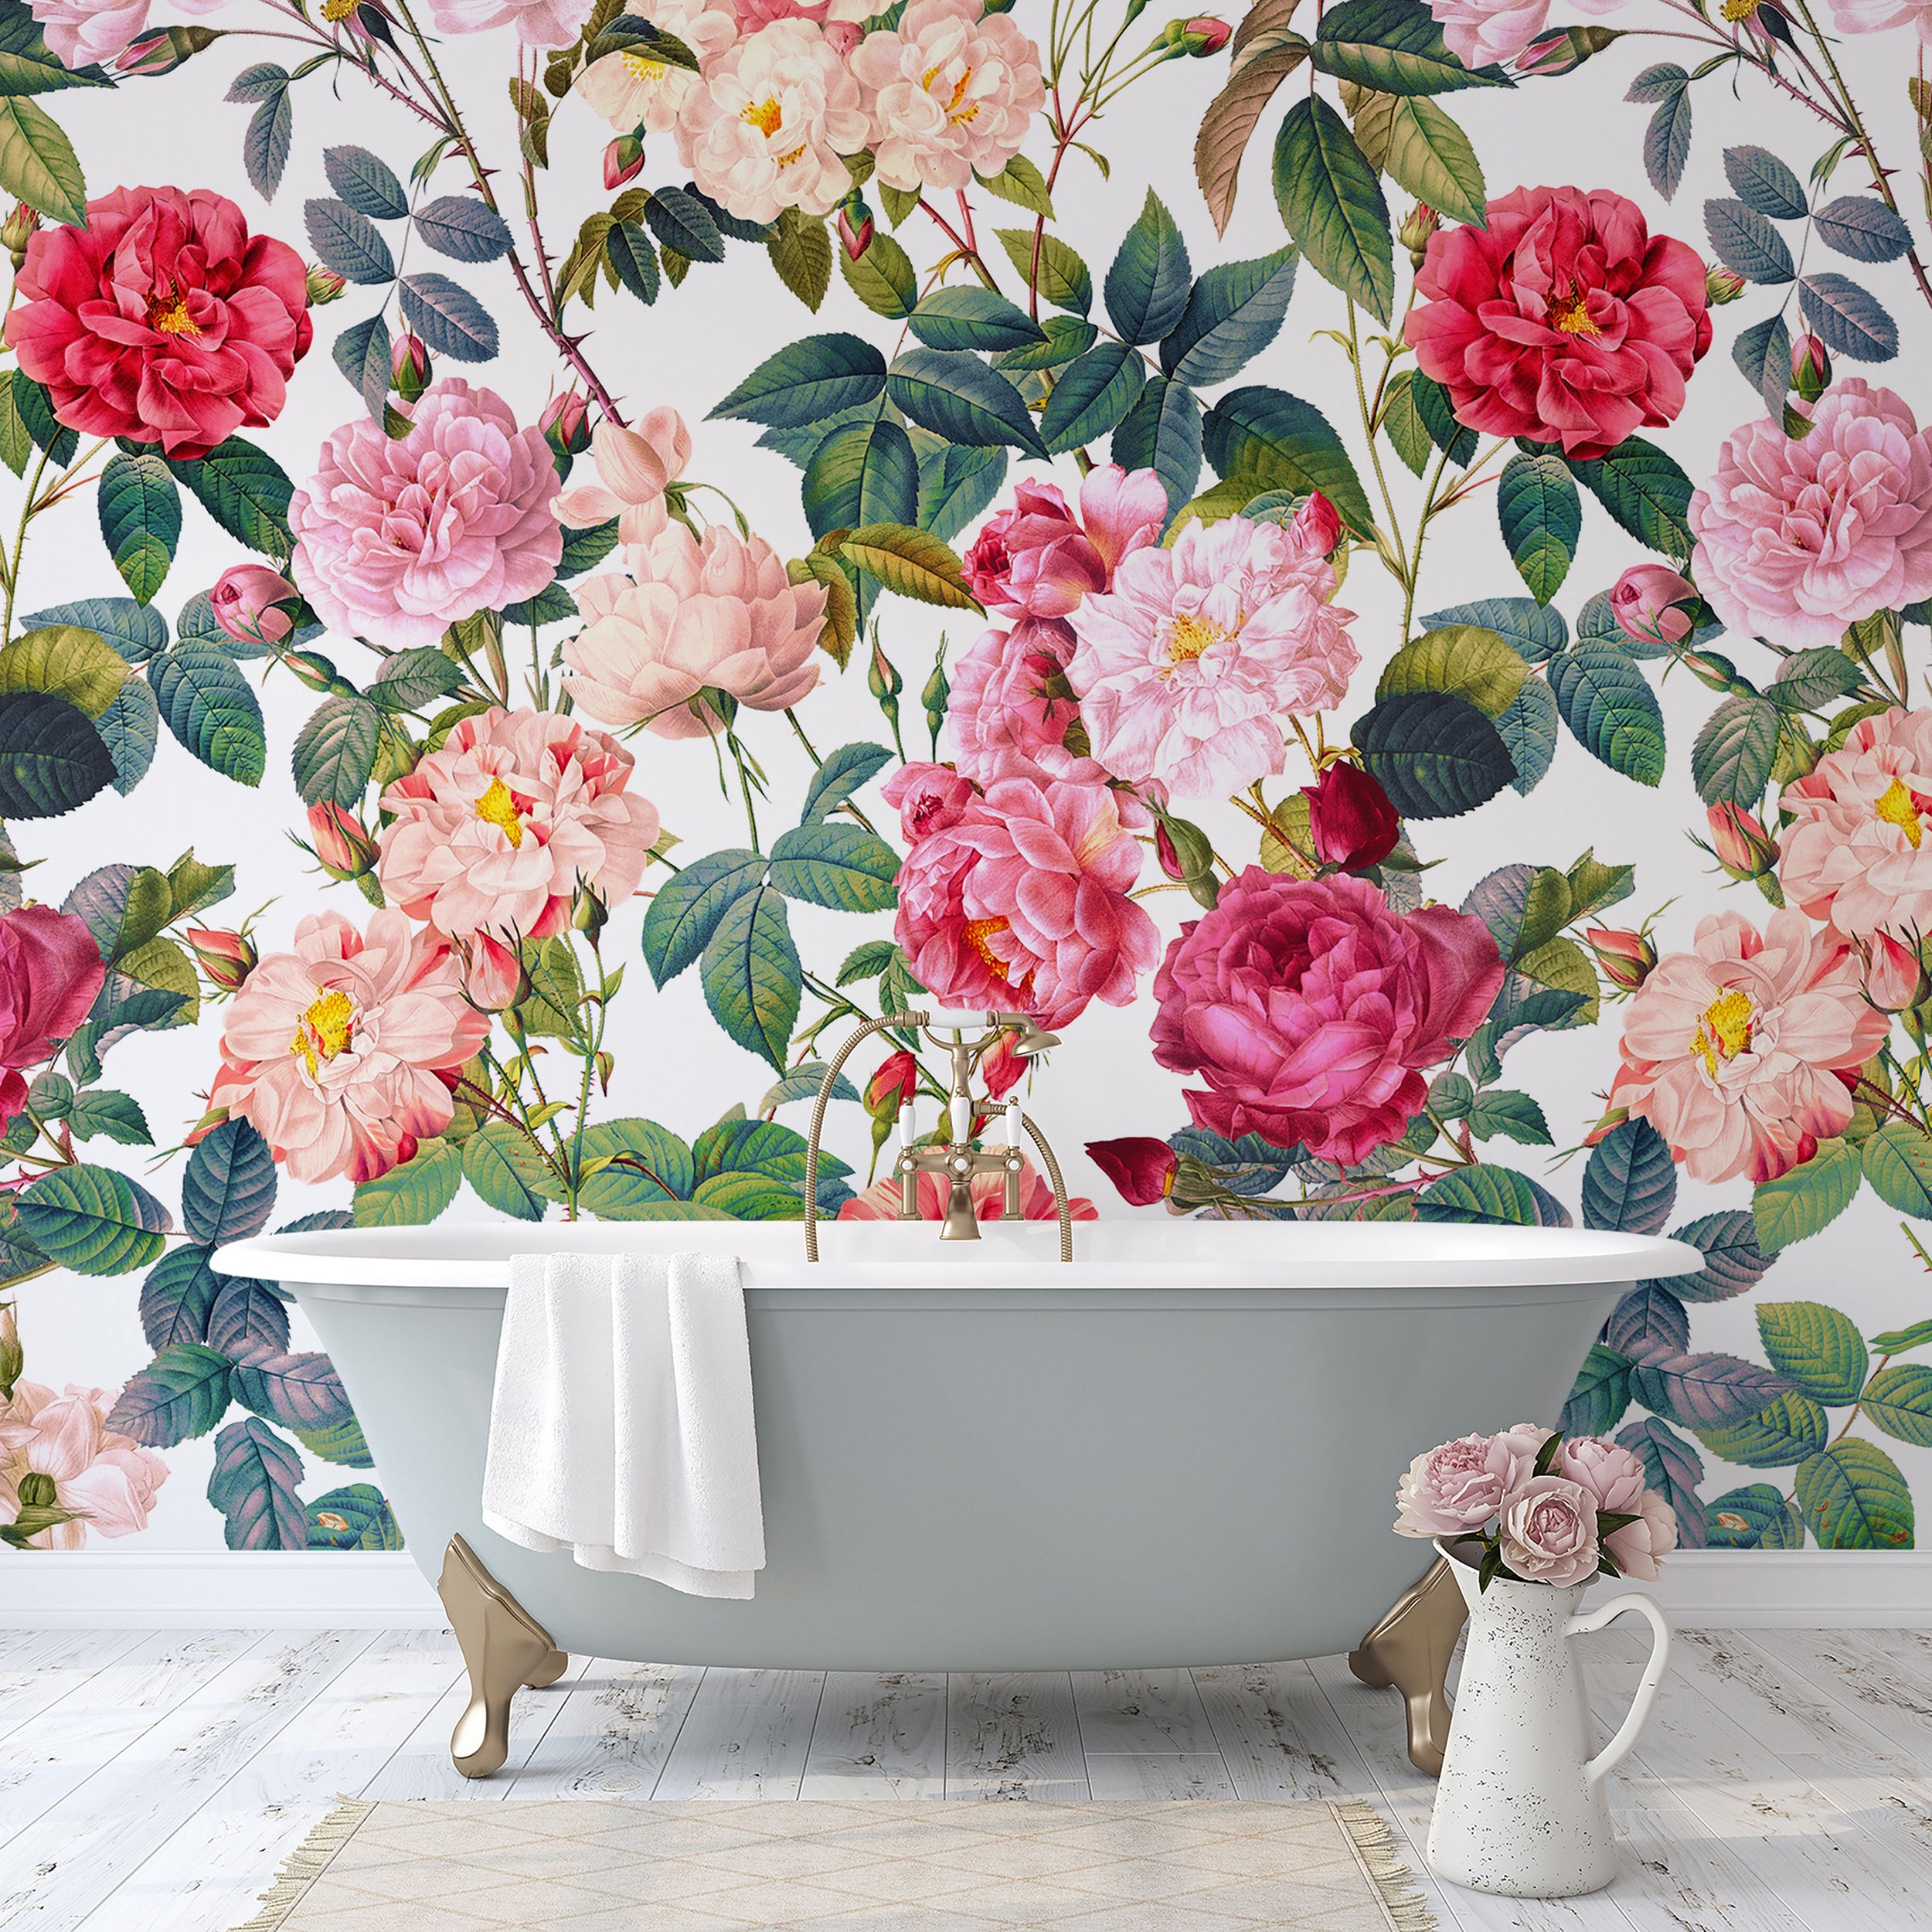 10. Floral Wallpaper Mural by Burcu Korkmazyurek in Pretty Rose Garden from €40.94 (per square metre), 